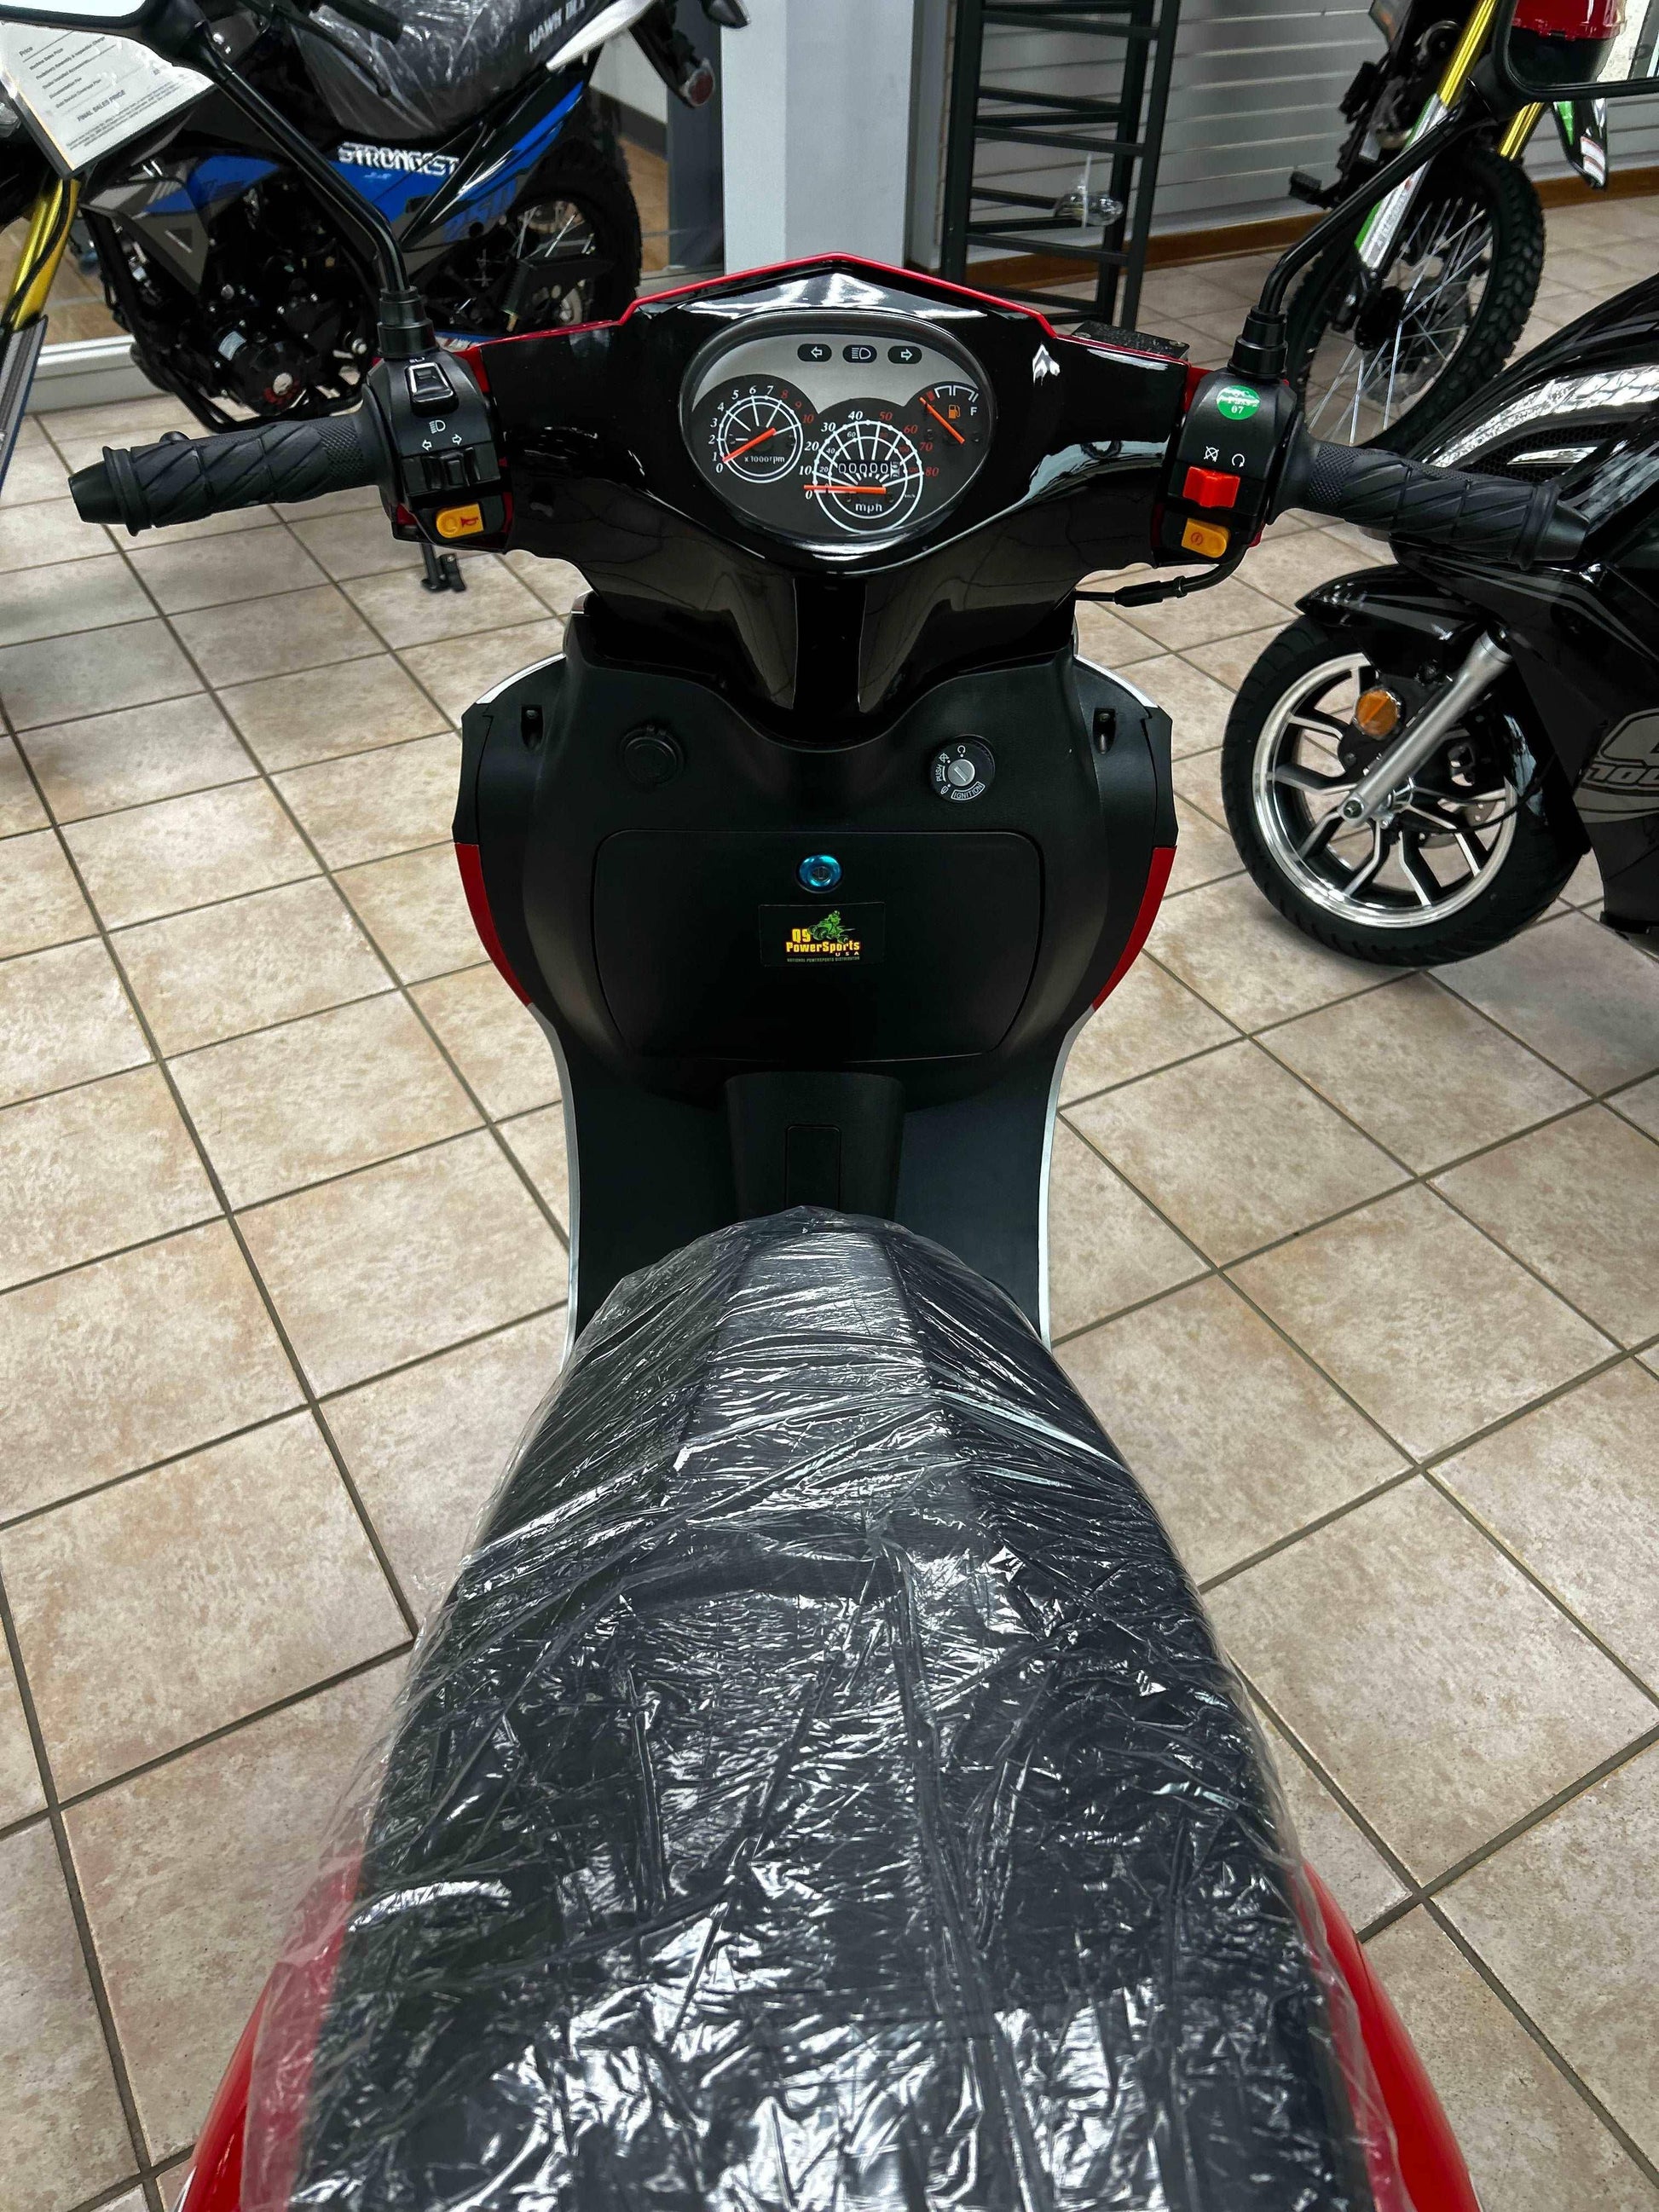 Pilot 150cc Scooters - Q9 PowerSports USA